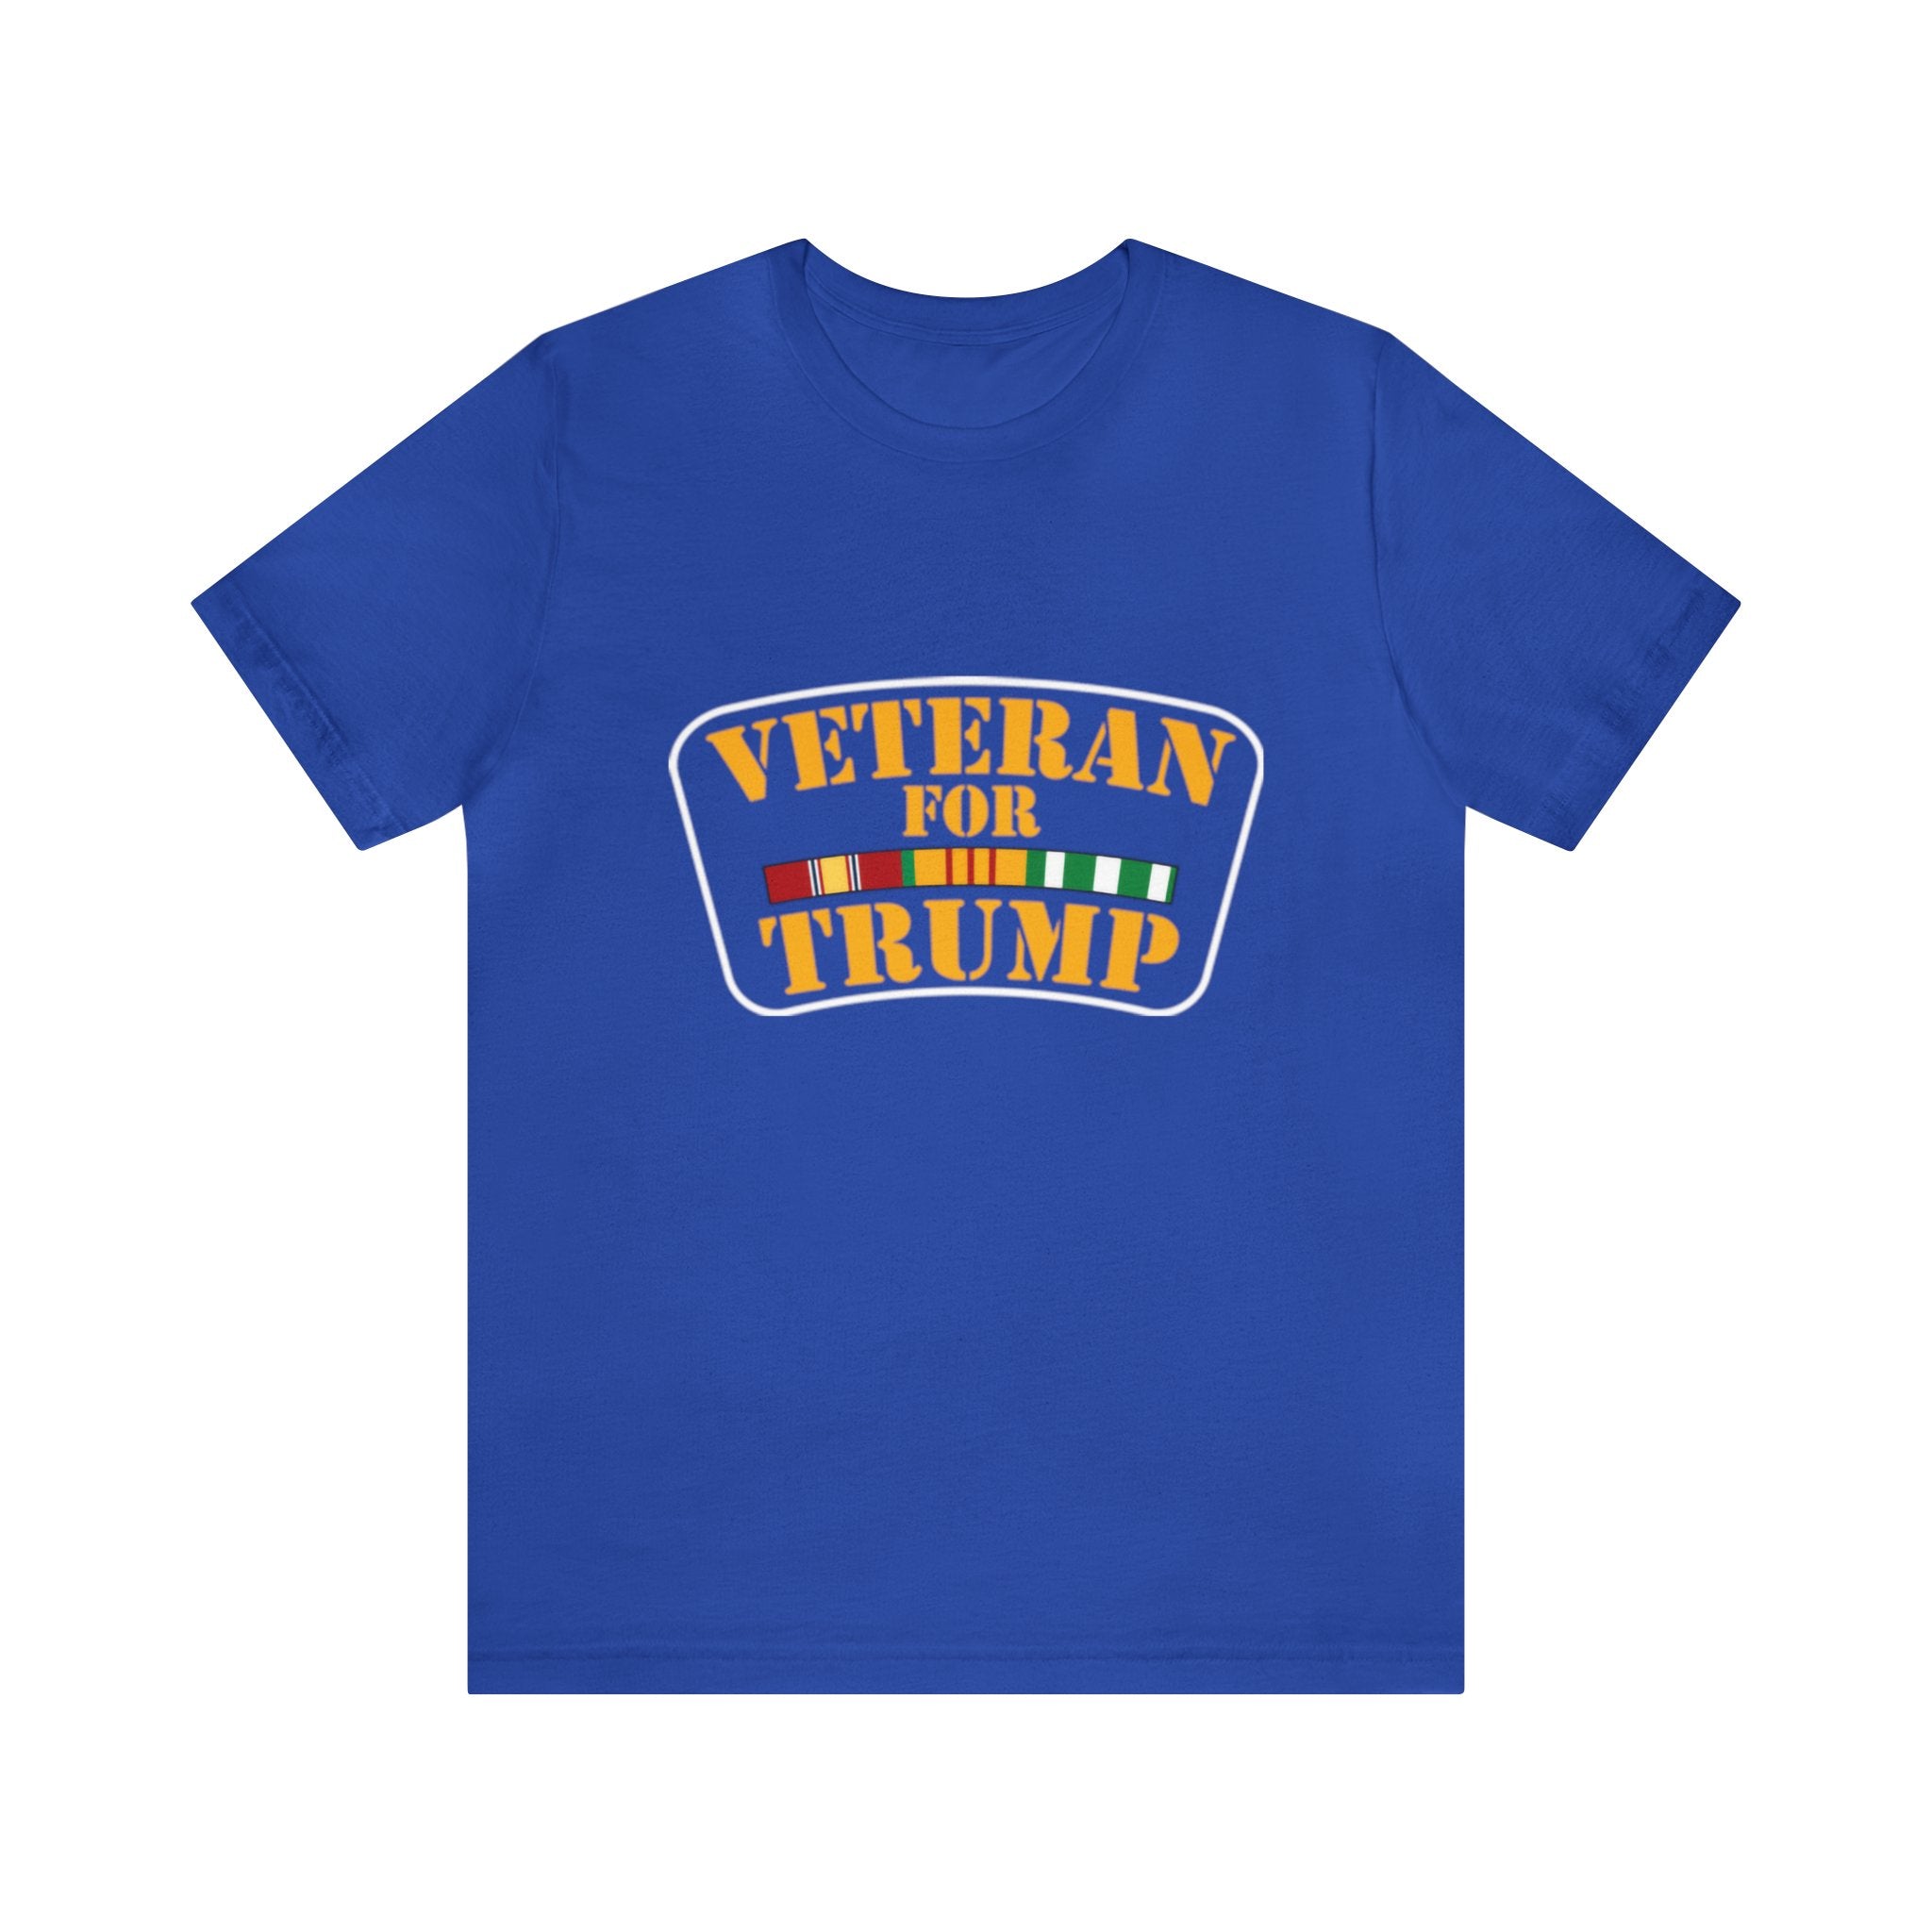 Veteran for Trump Premium Short Sleeve T-Shirt